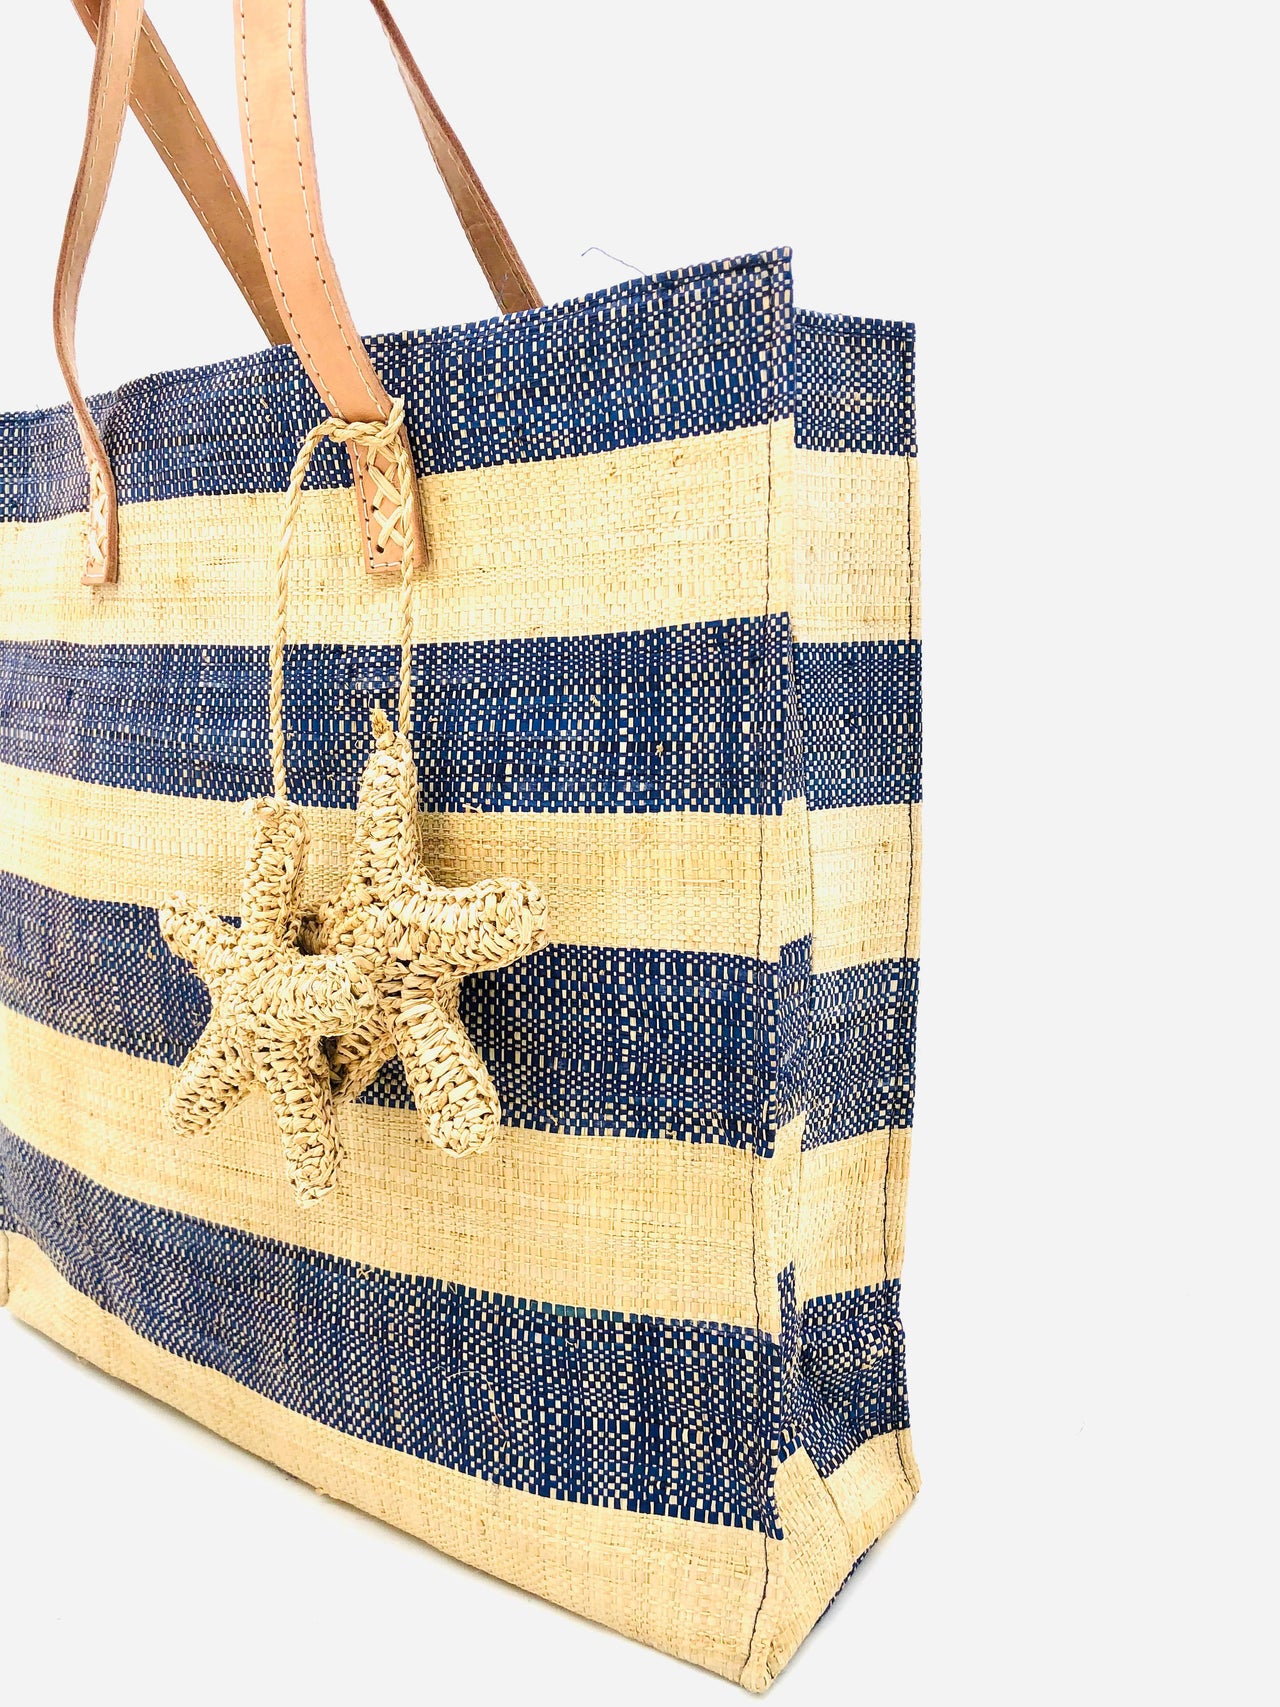 Starfish Straw Bag with Crochet Starfish Charm Embellishment